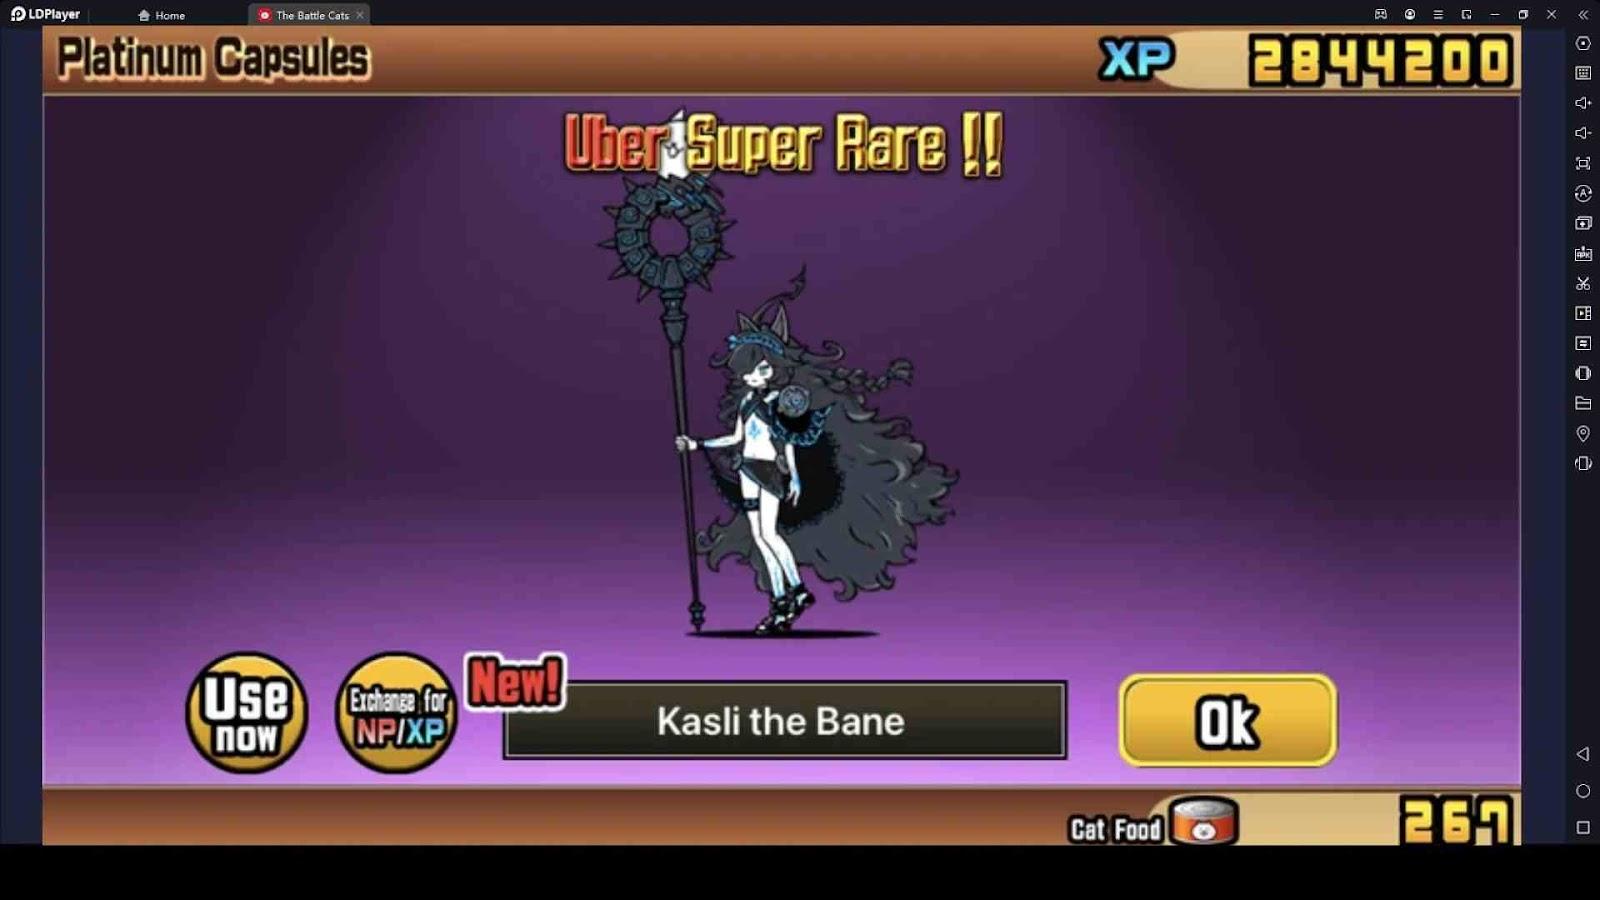 Kasli the Bane